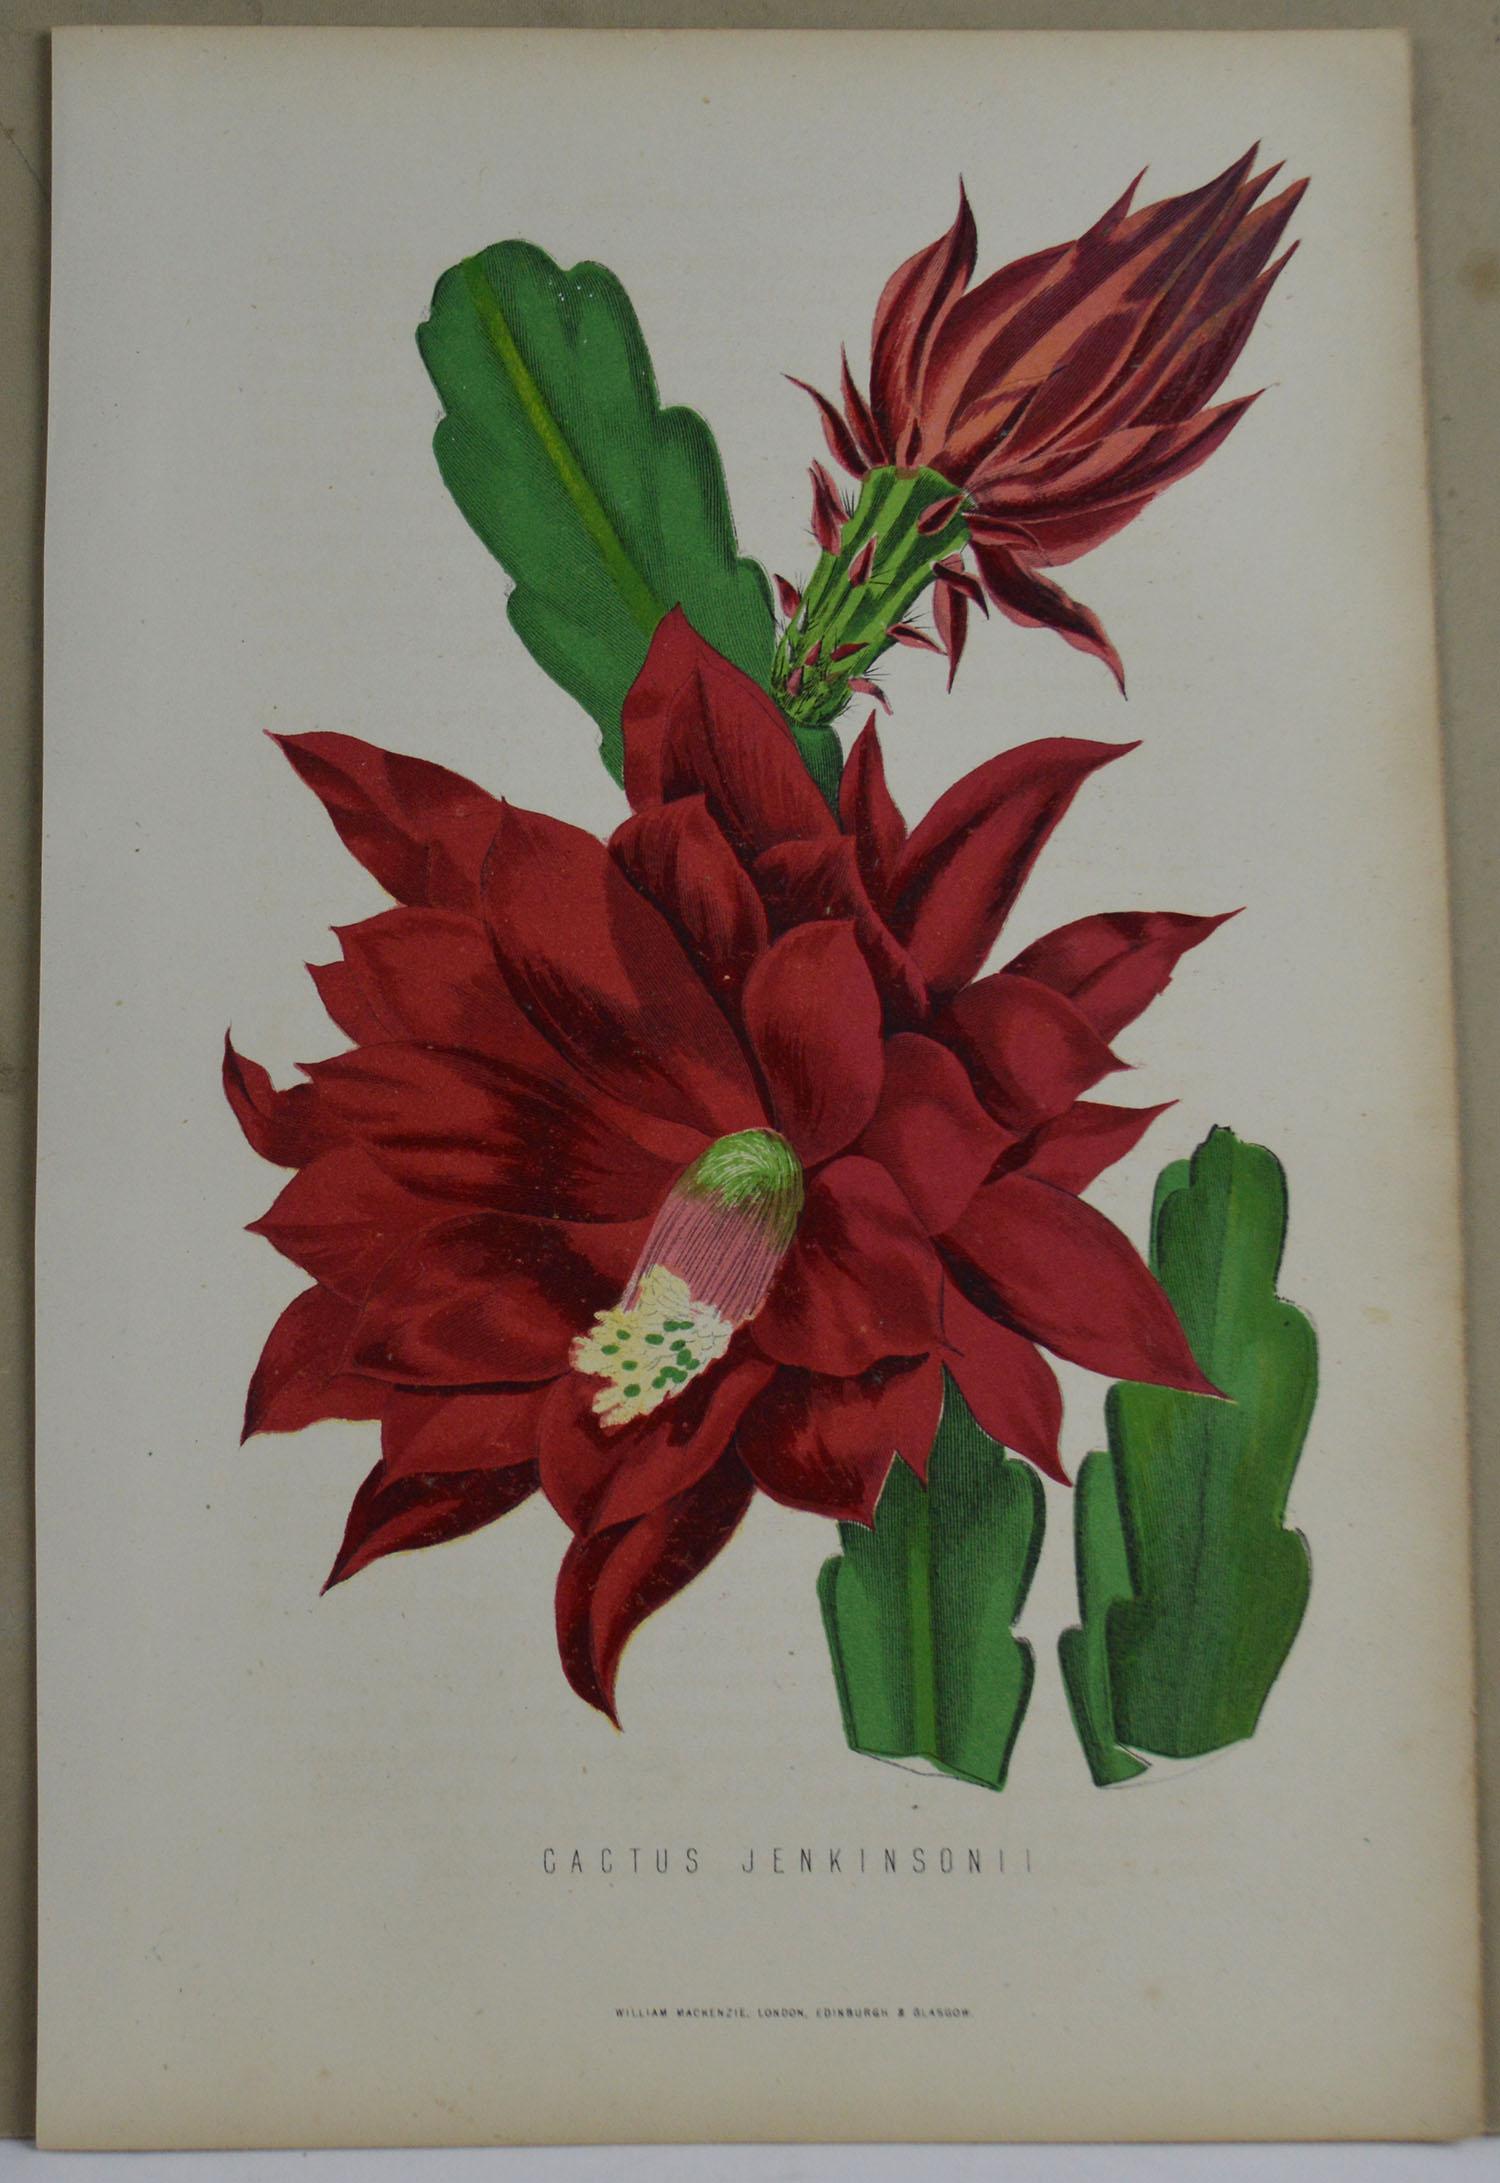 Chinese Export Original Antique Botanical Print, Cactus Jenkinsonii, Unframed, circa 1850